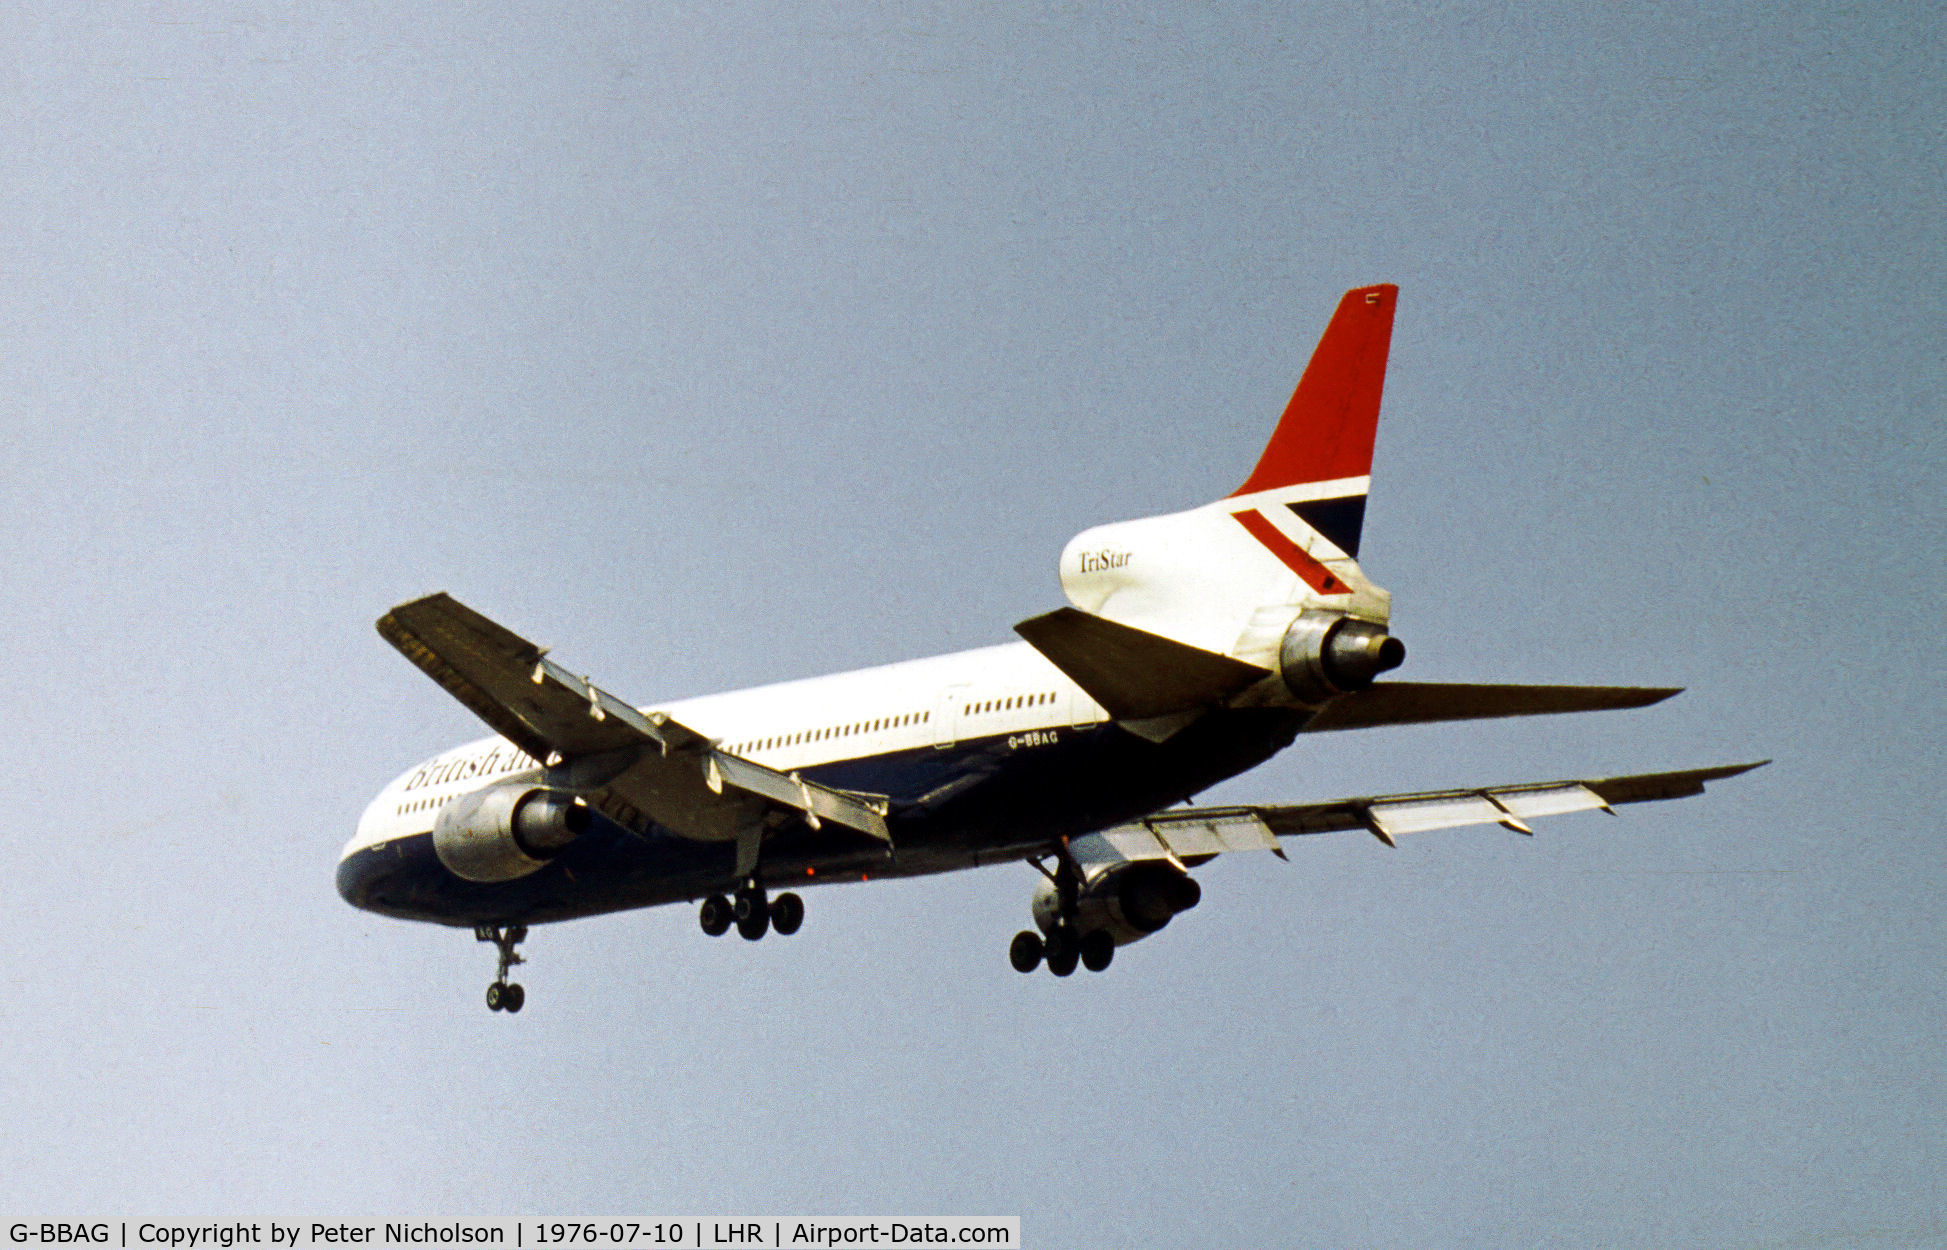 G-BBAG, 1974 Lockheed L-1011-385-1 TriStar 1 C/N 193E-1094, Lockheed TriStar 385 of British Airways on approach to Runway 10L at Heathrow in the Summer of 1976.